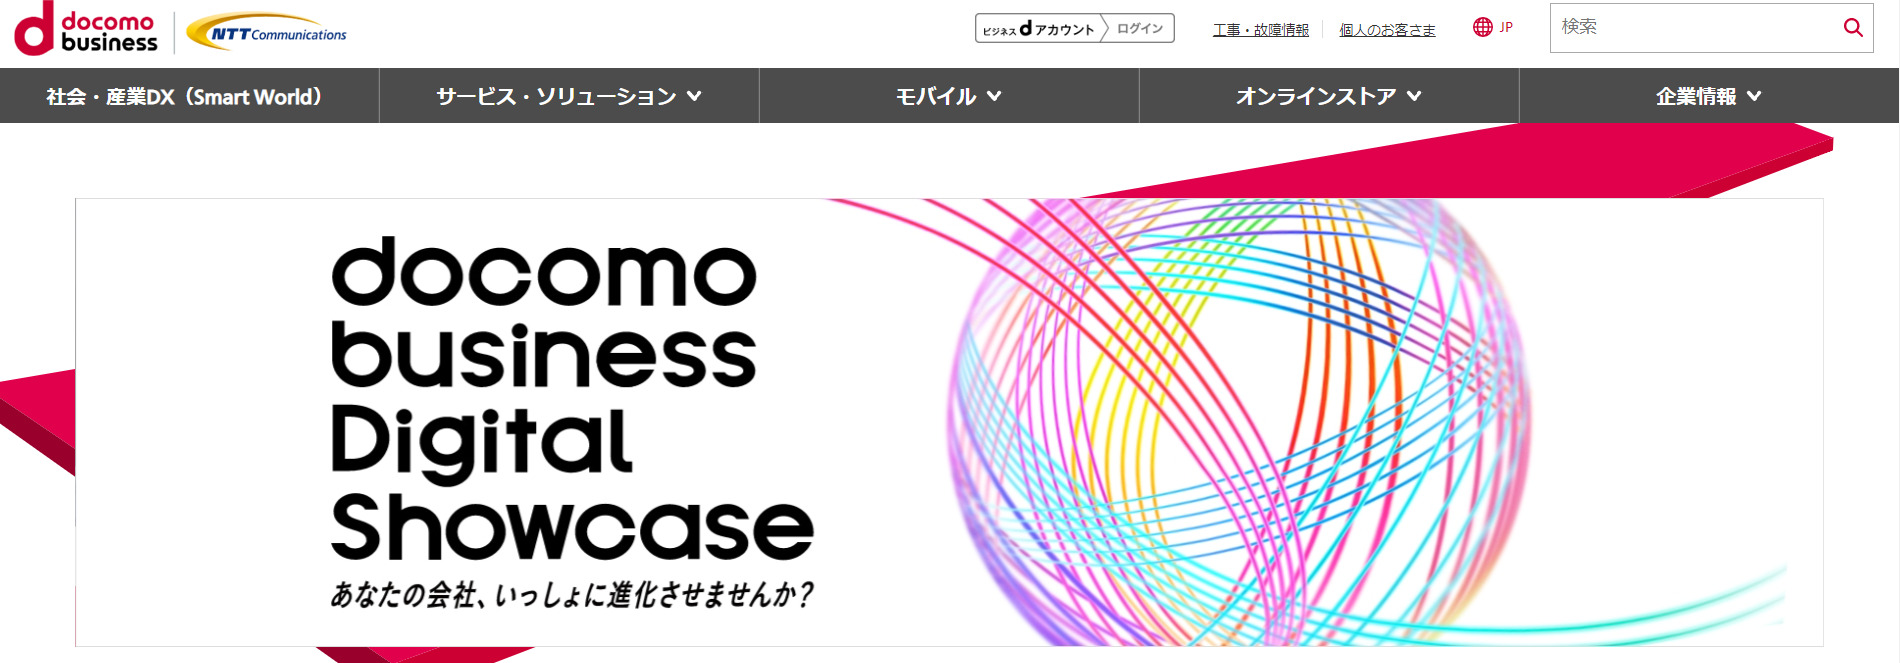 NTTコミュニケーションズ株式会社のトップページ